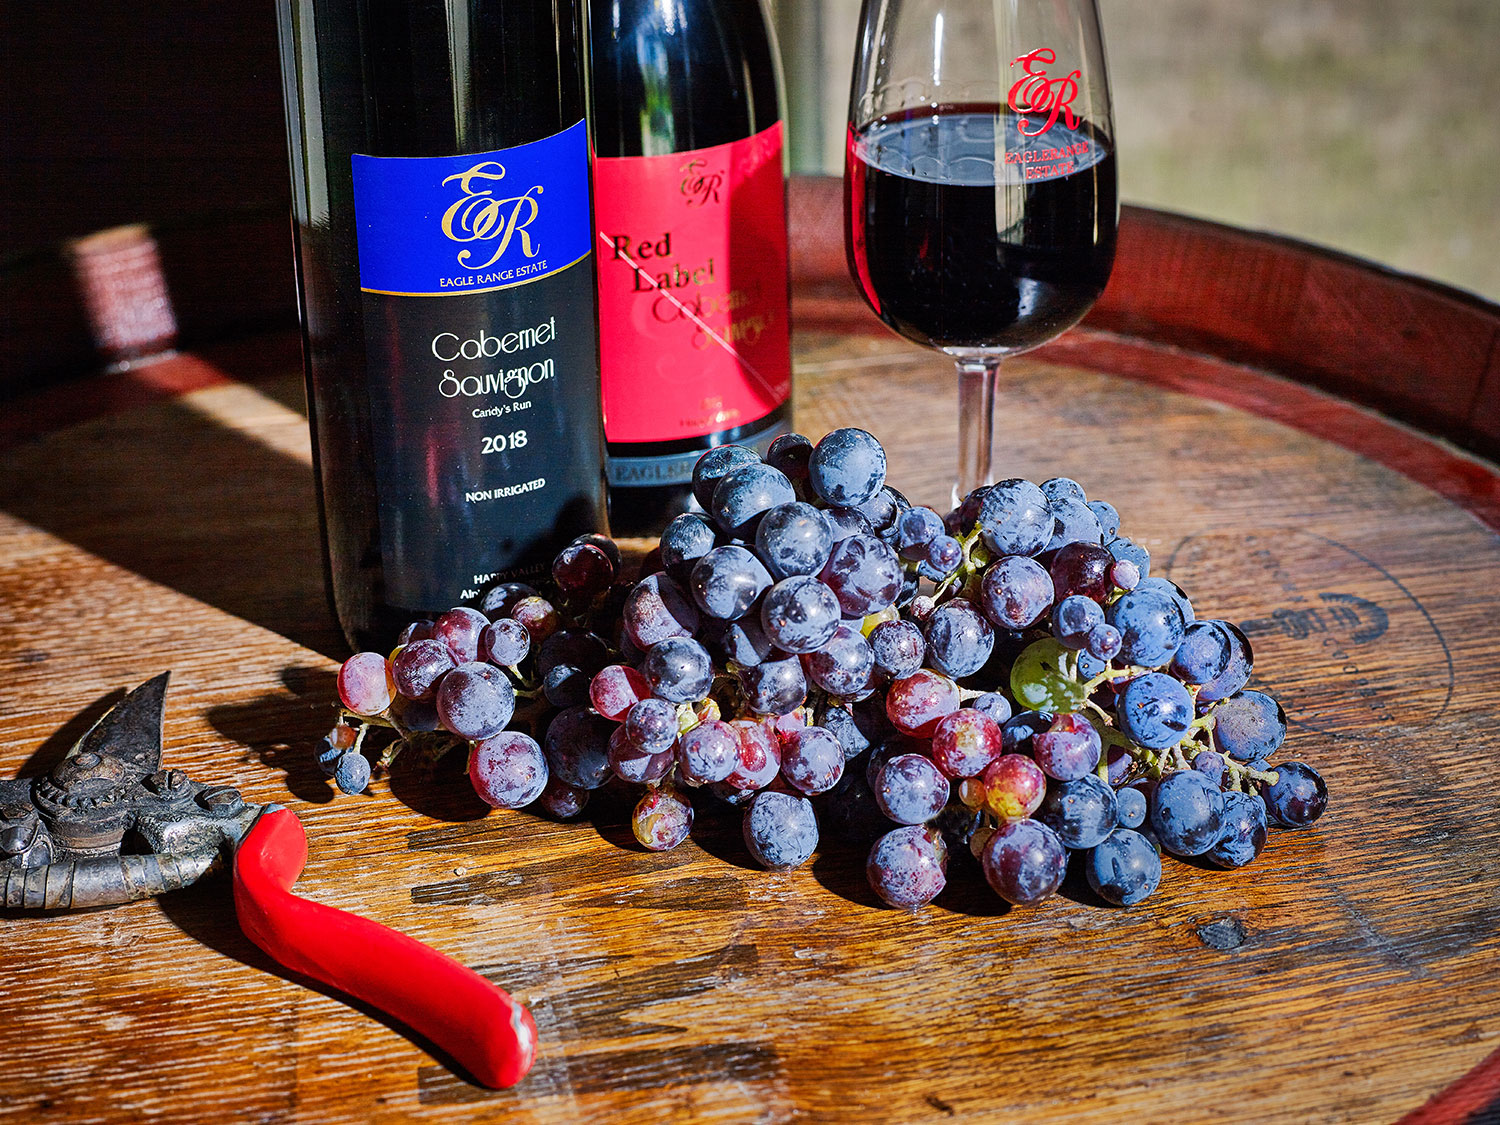 Premium Red and Blue Label Cabernet wines